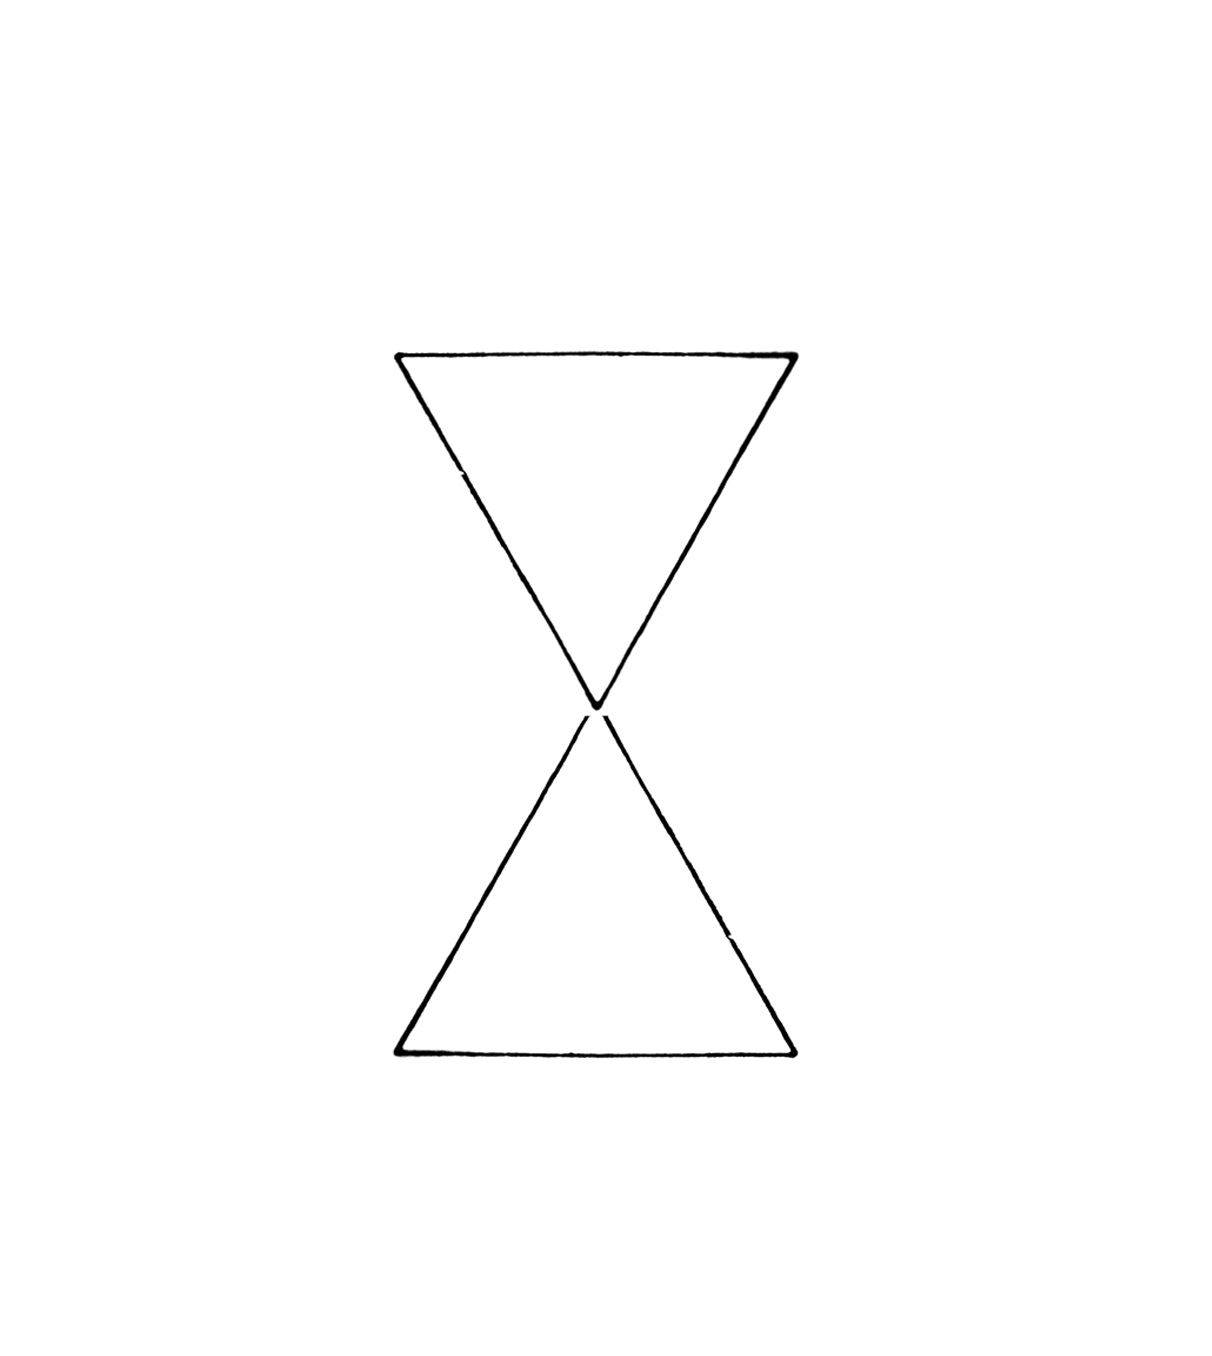 Write a program that draws two triangles like this.